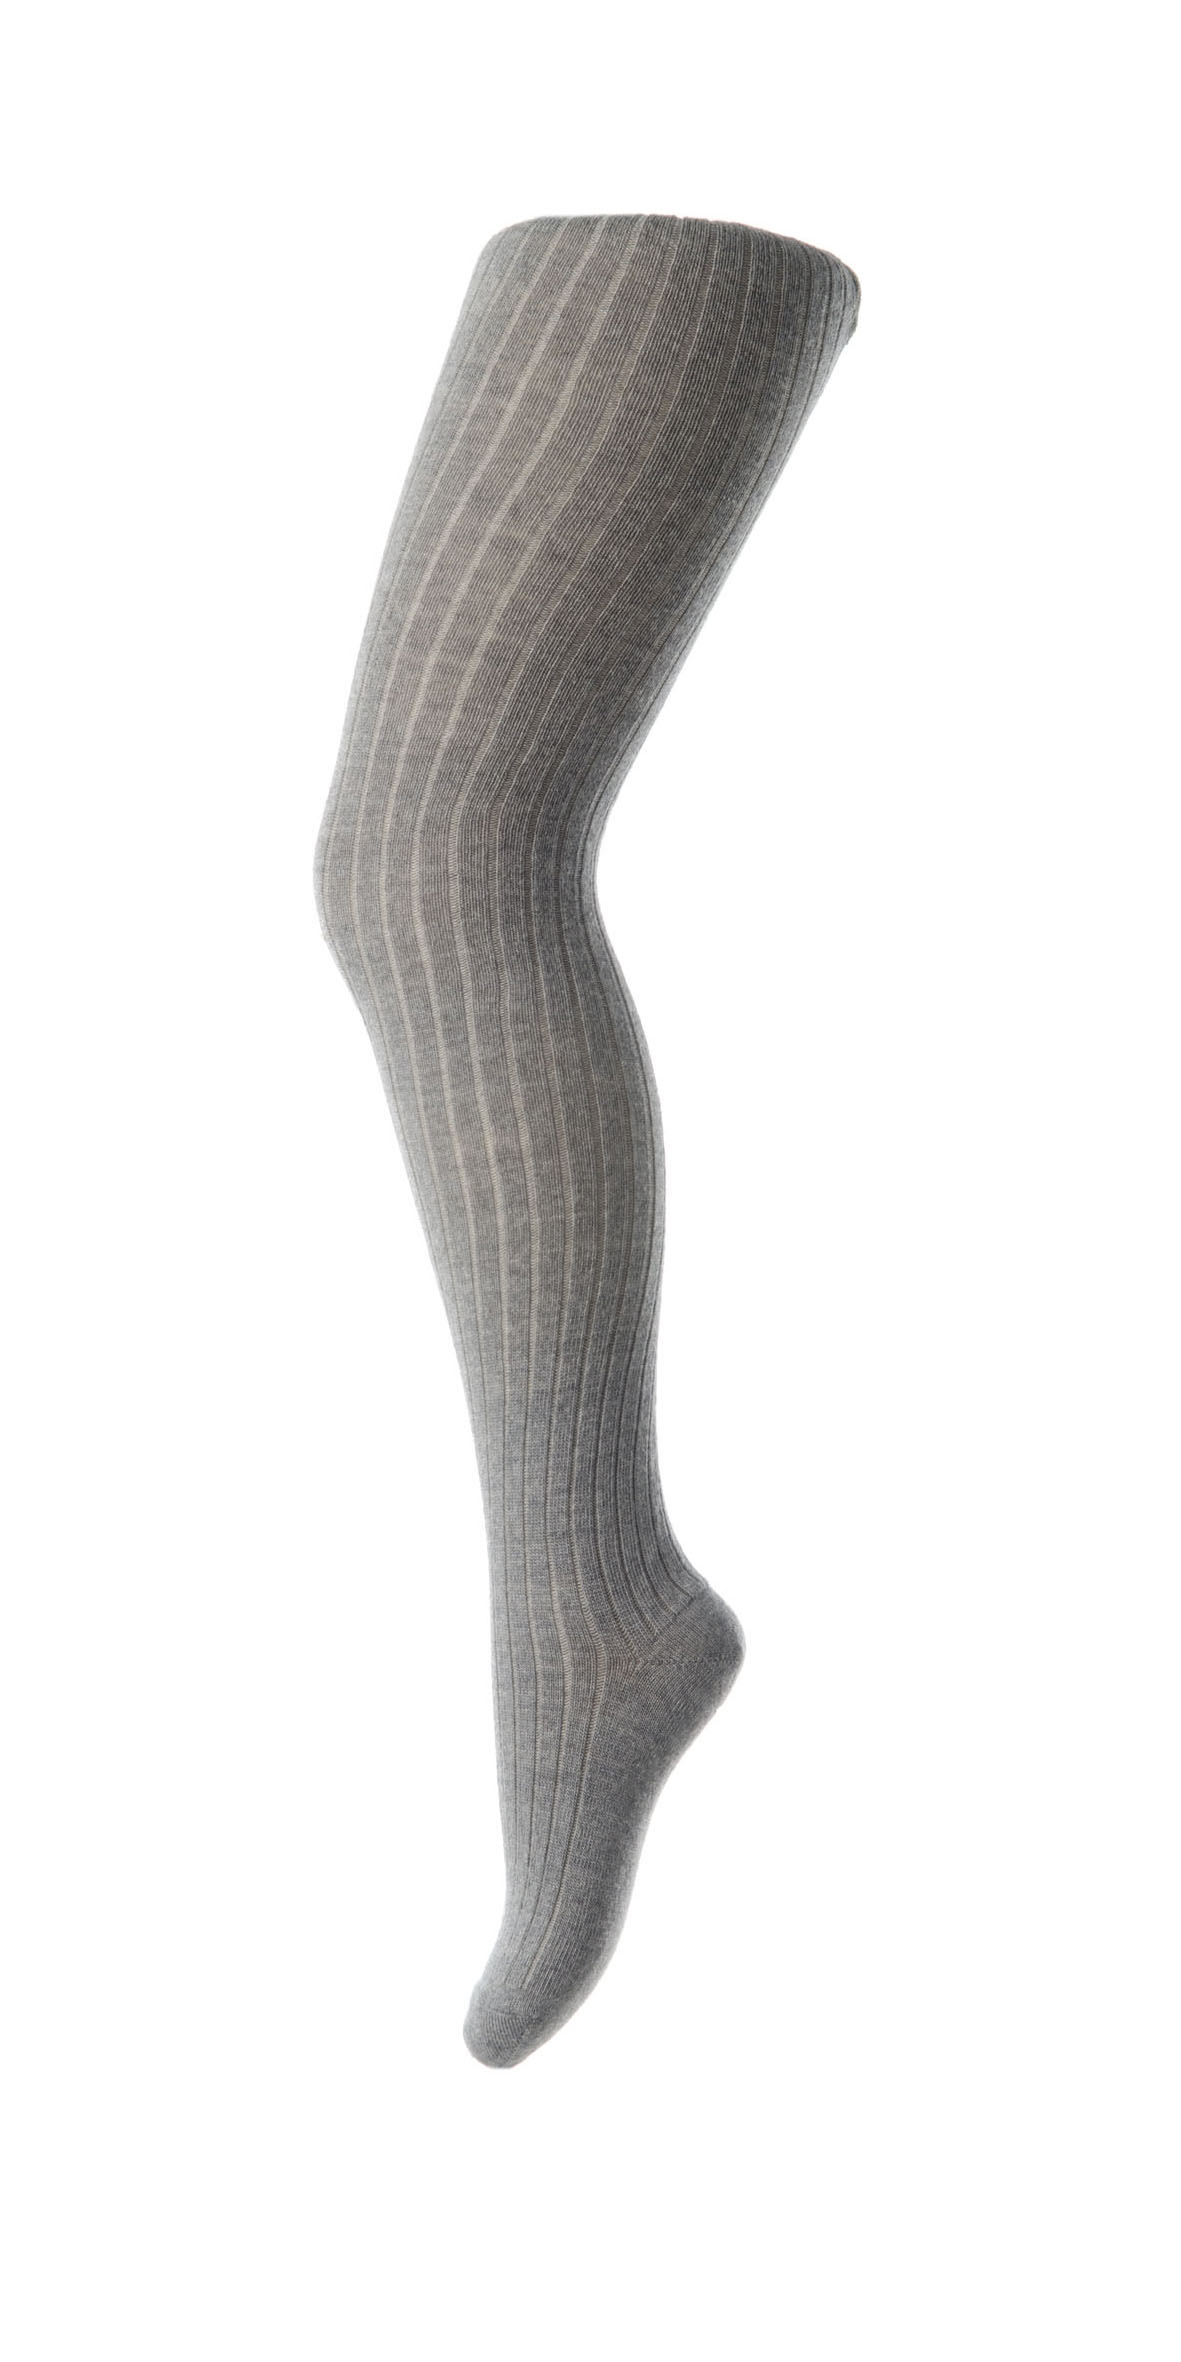  Uld Strømpebuks, Grey Marled, 80 cm